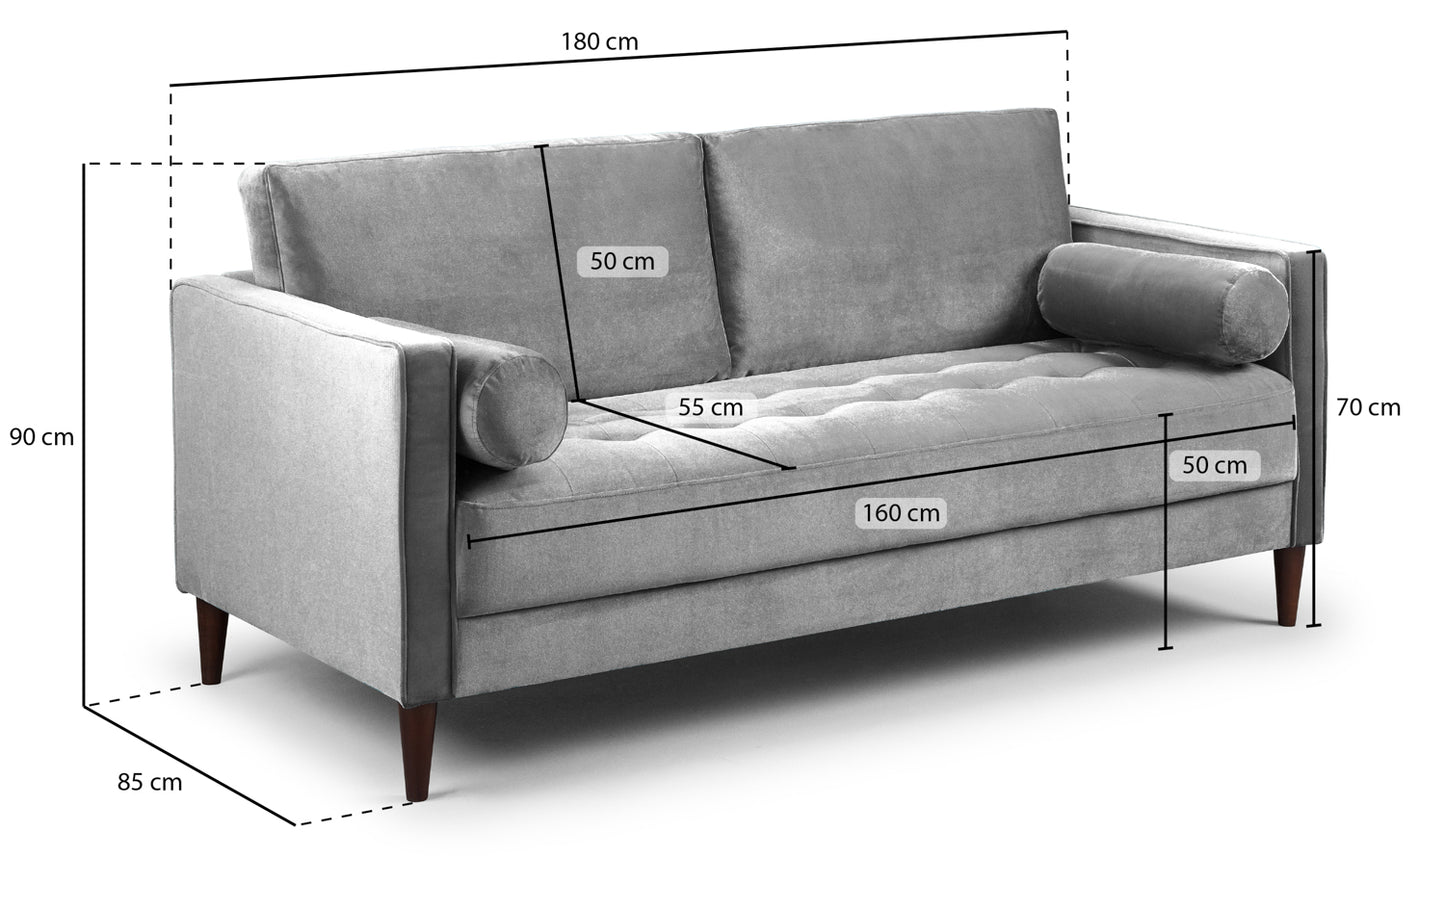 Halston 3 Seater Sofa